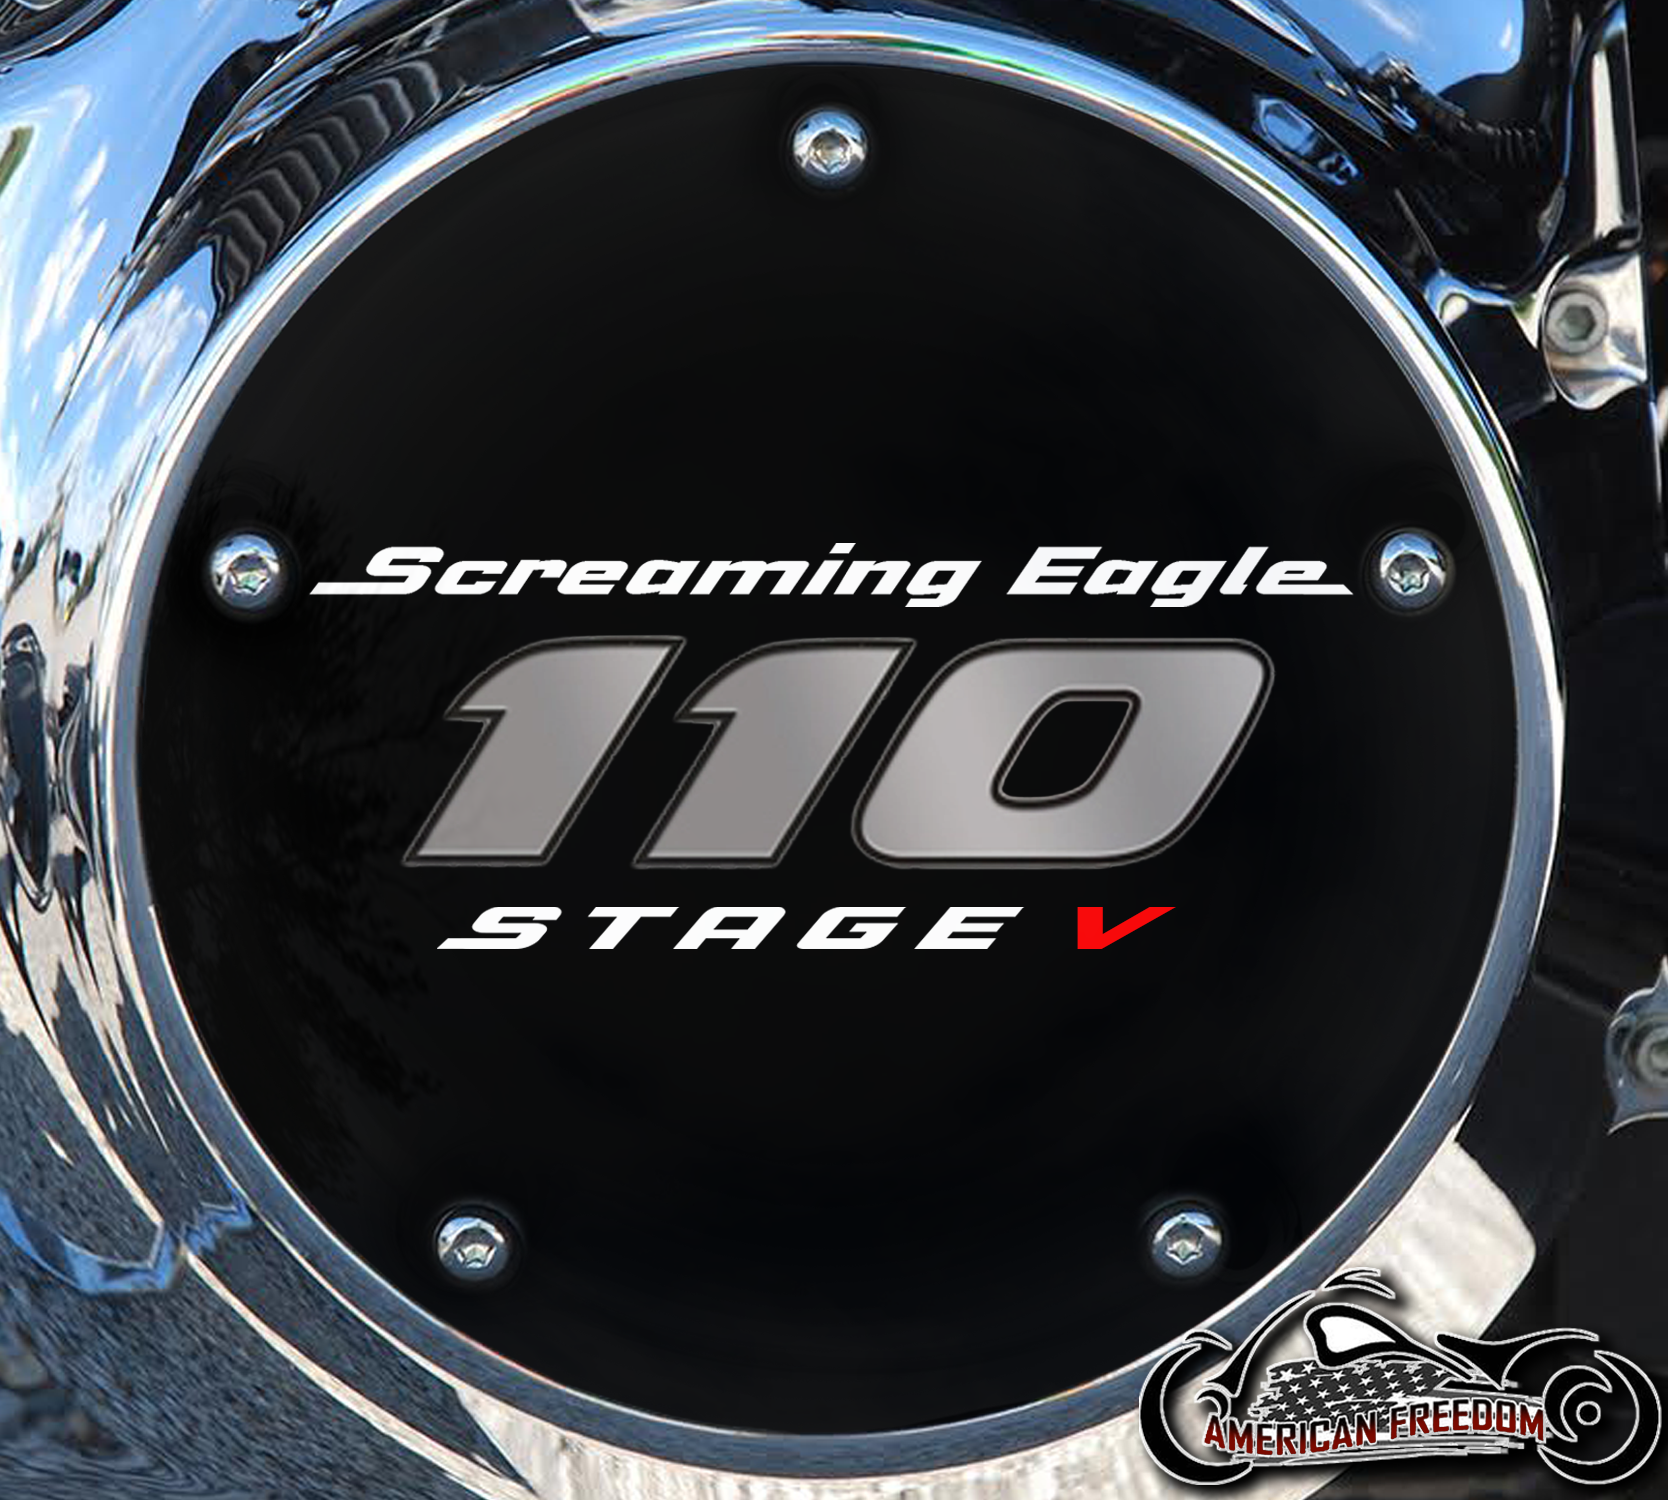 Screaming Eagle Stage V 110 Derby Cover